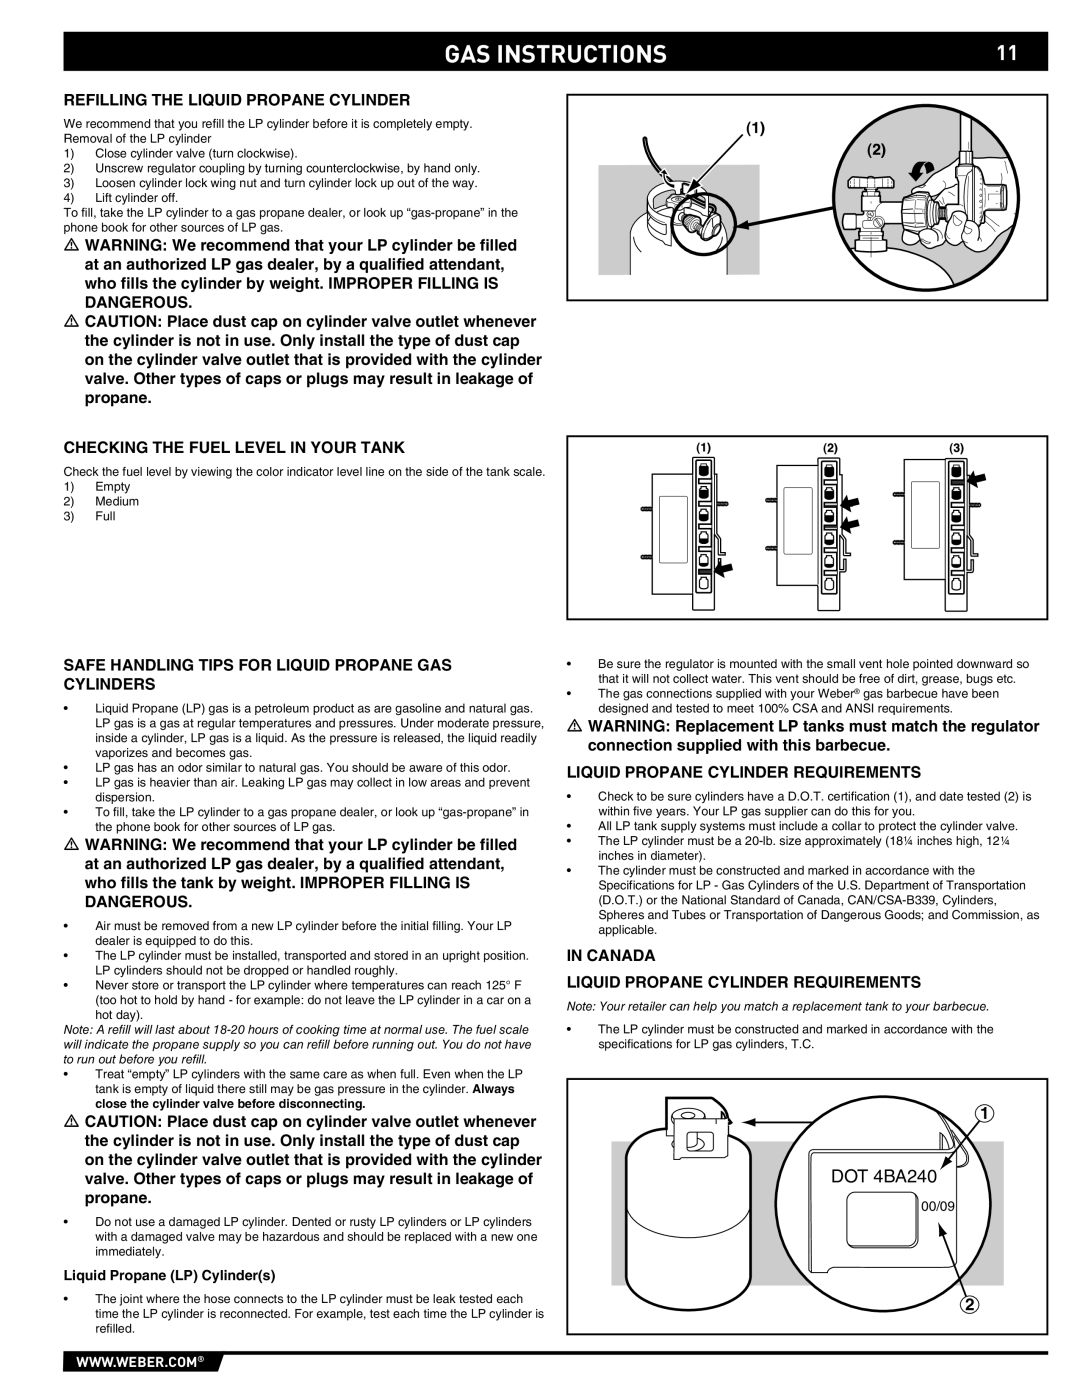 Summit 89190 manual Gas Instructions, DOT 4BA240, Liquid Propane LP Cylinders 